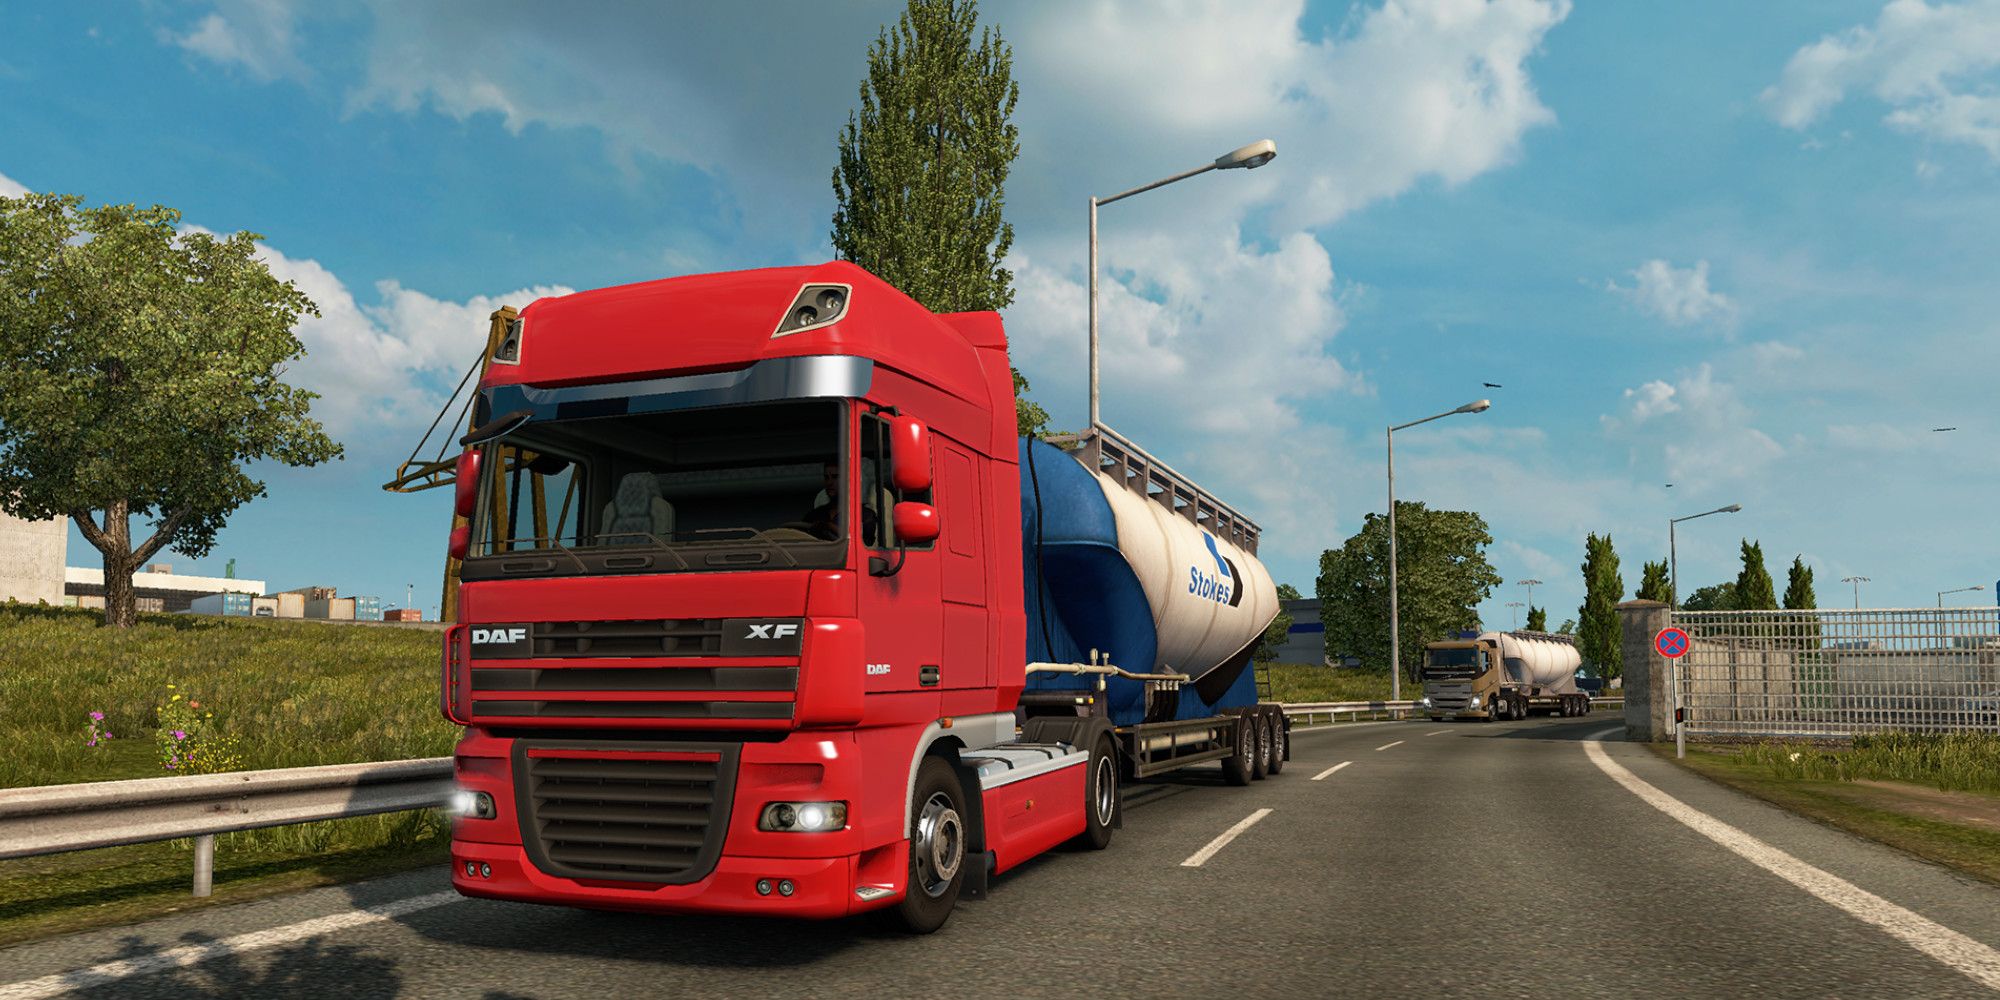 A red truck pulls a gas tanker trailer along an urban road